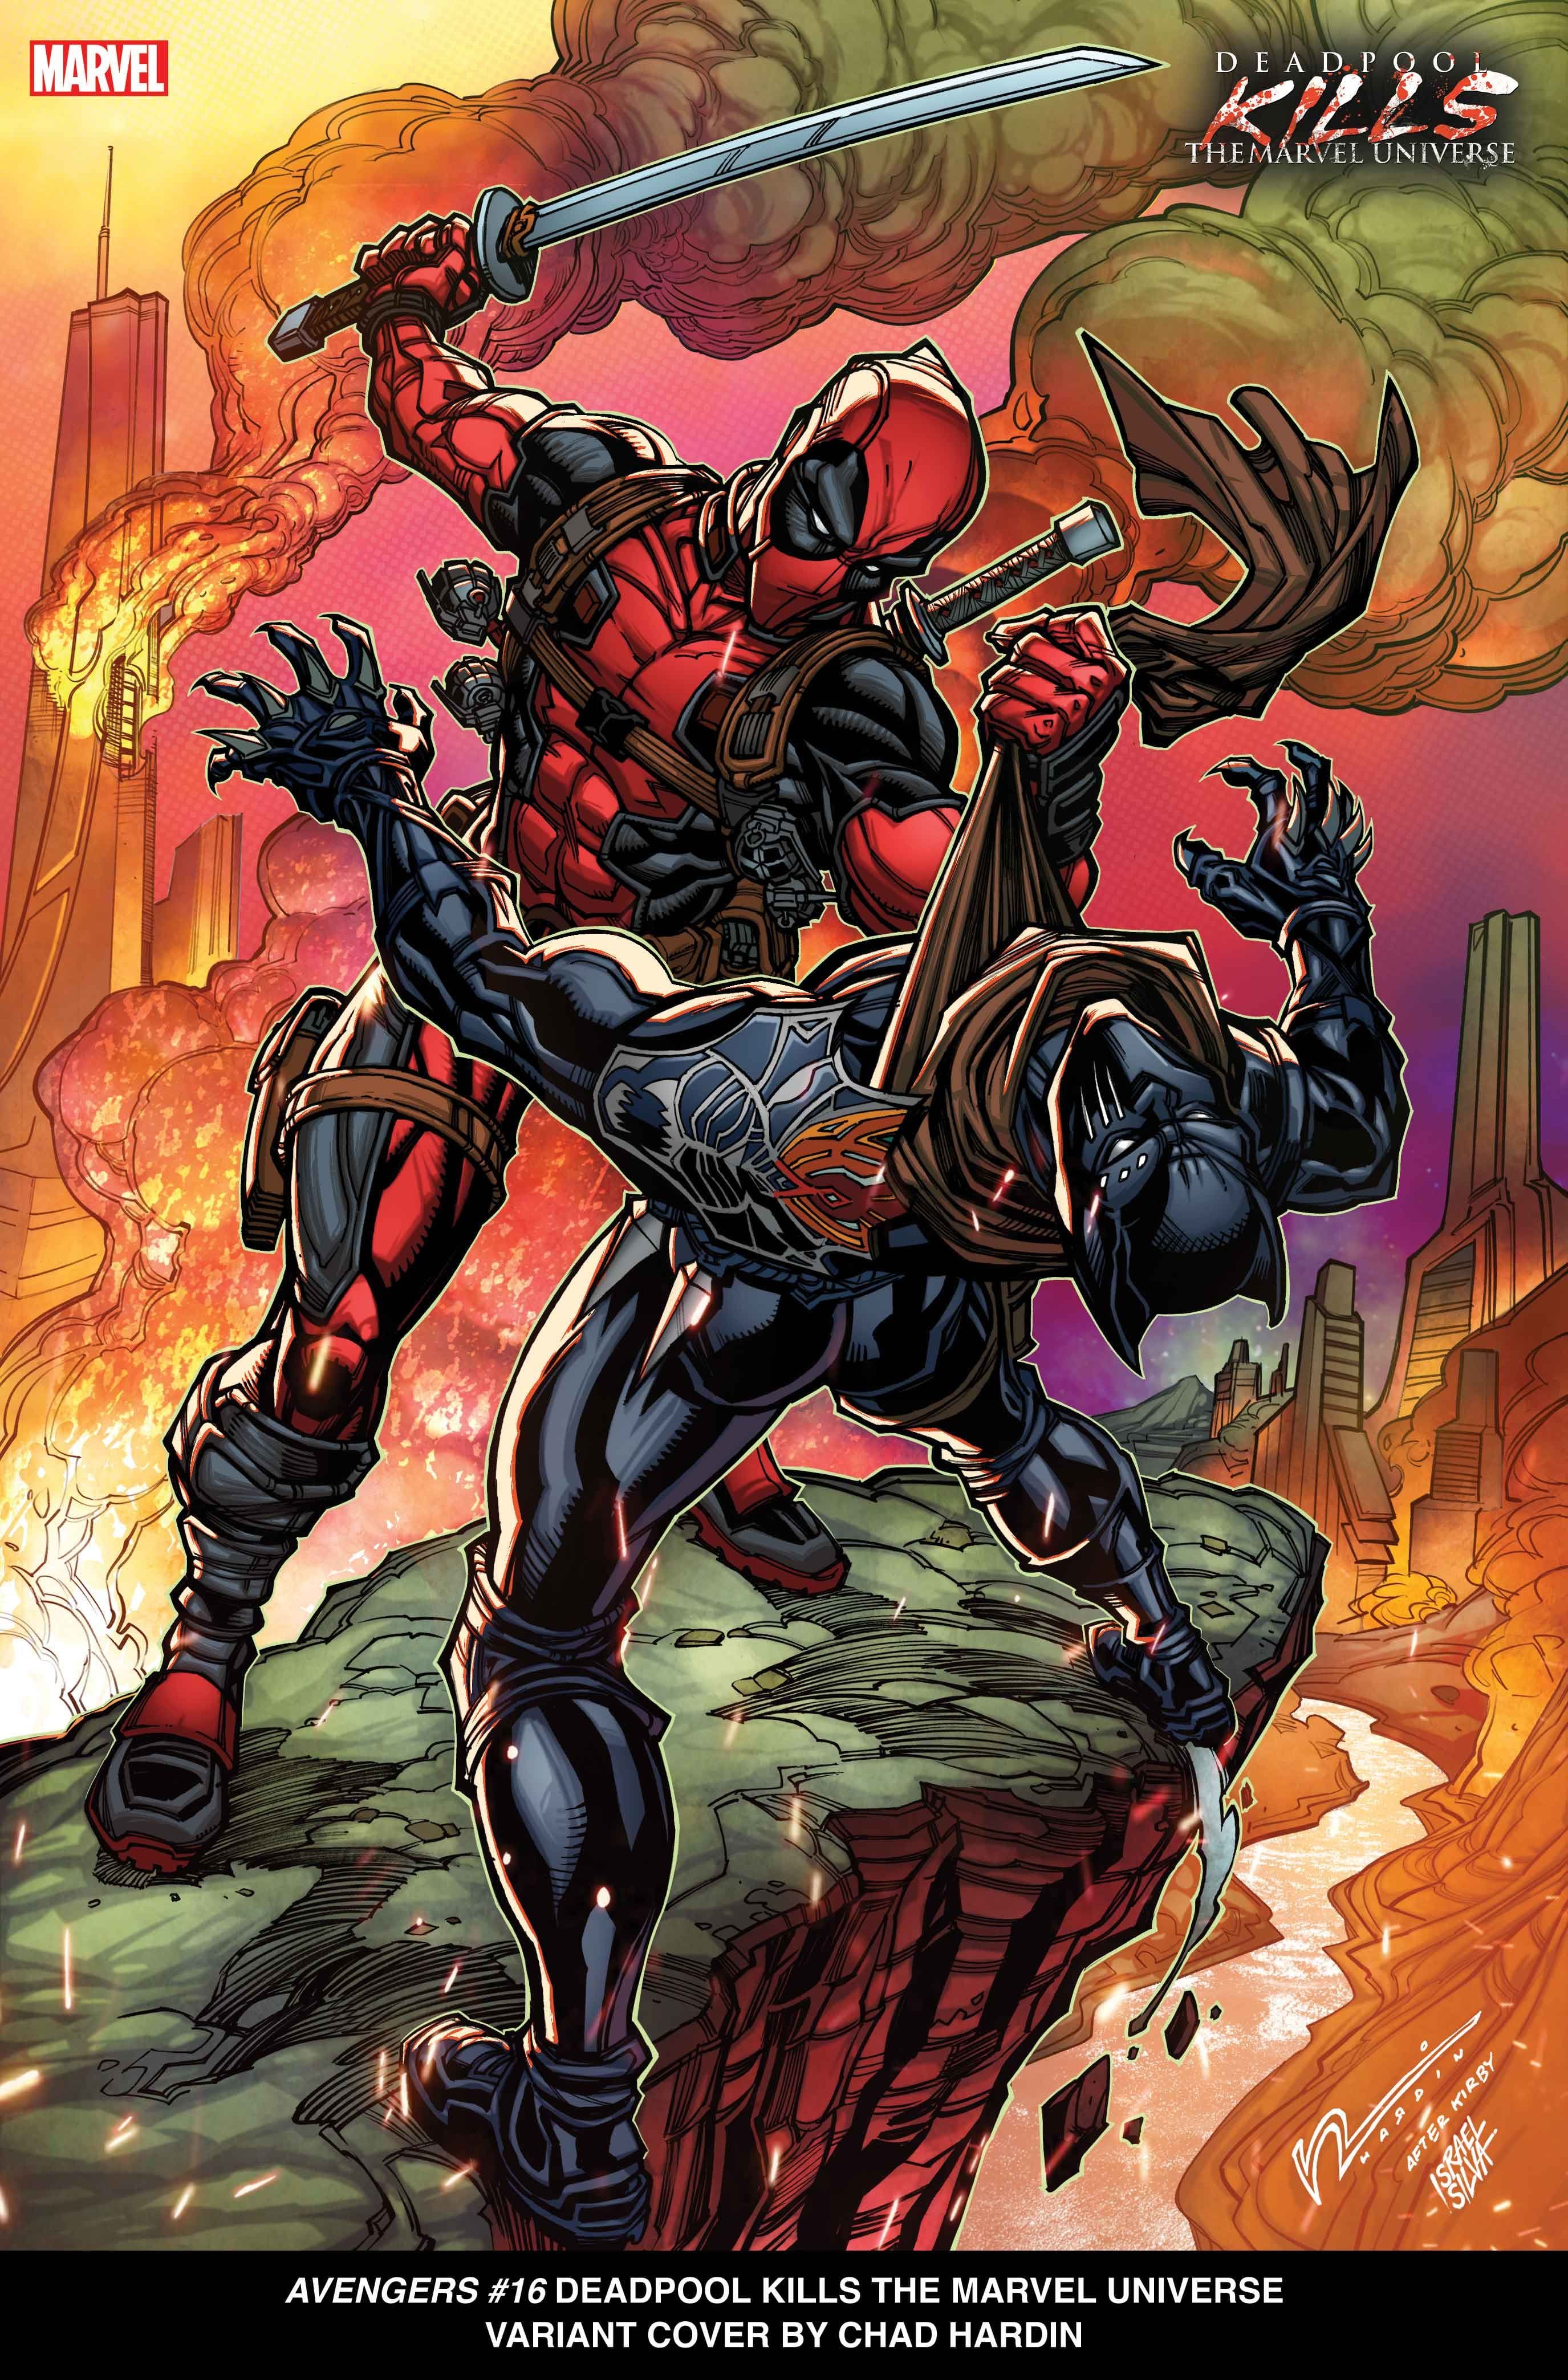 AVENGERS #16 Deadpool Kills the Marvel Universe Variant Cover by Chad Hardin